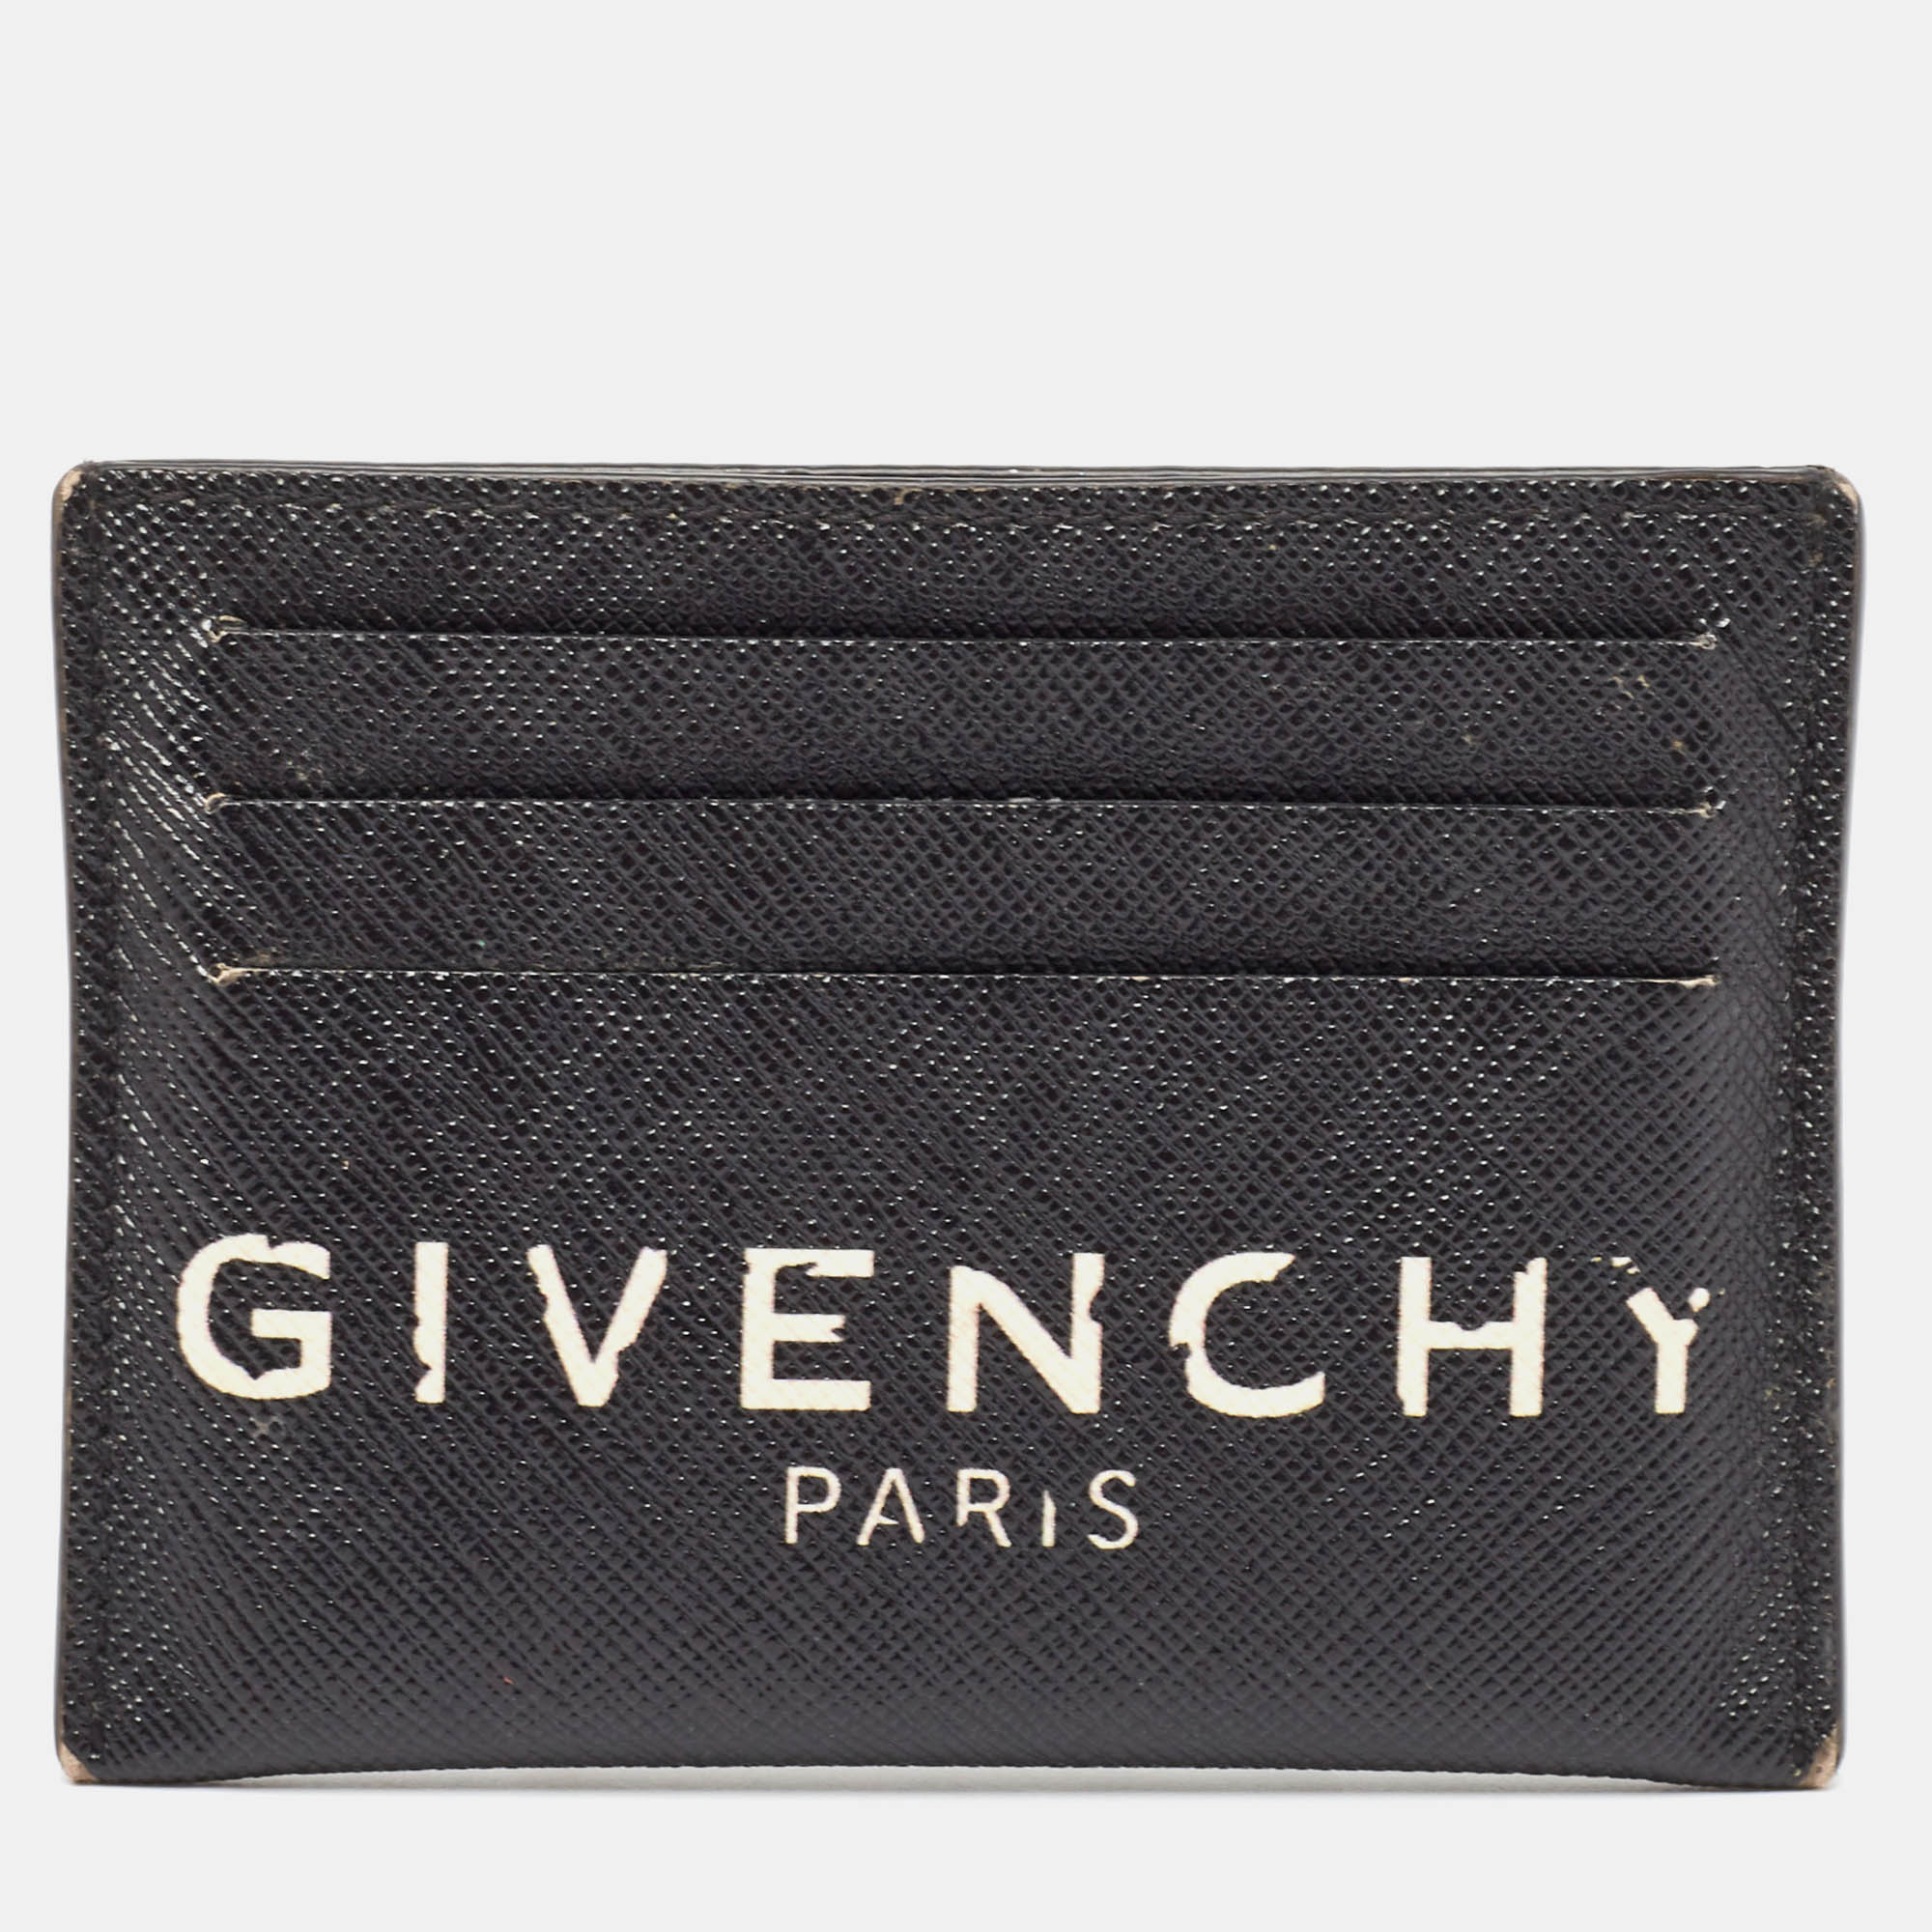 Givenchy black/white leather logo card holder